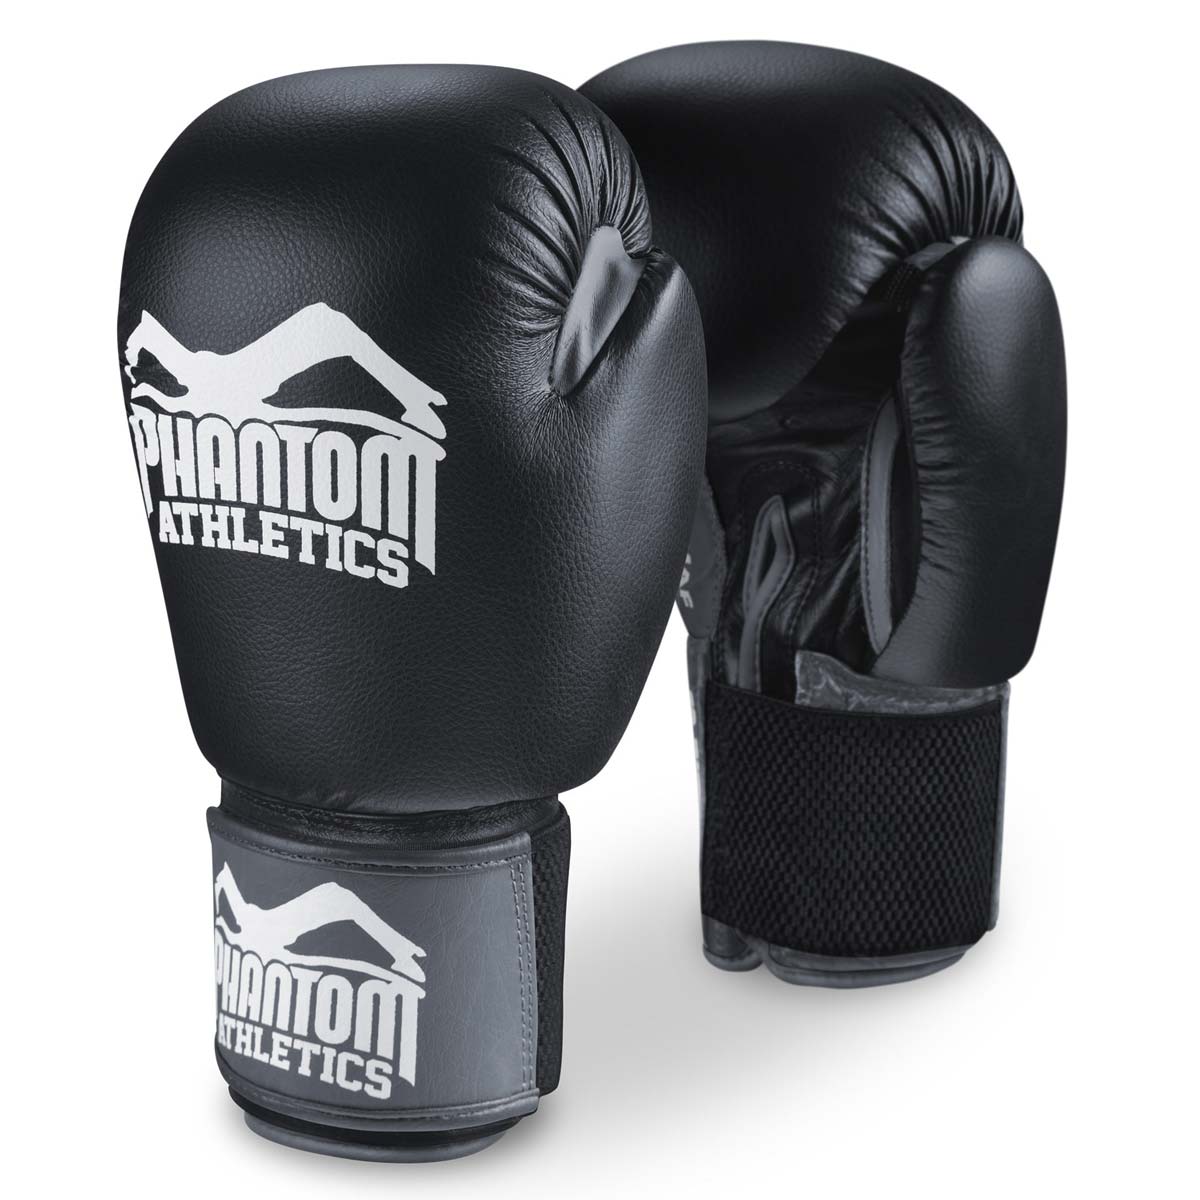 Bokserske rukavice Phantom Ultra za treninge, sparinge i takmičenja.